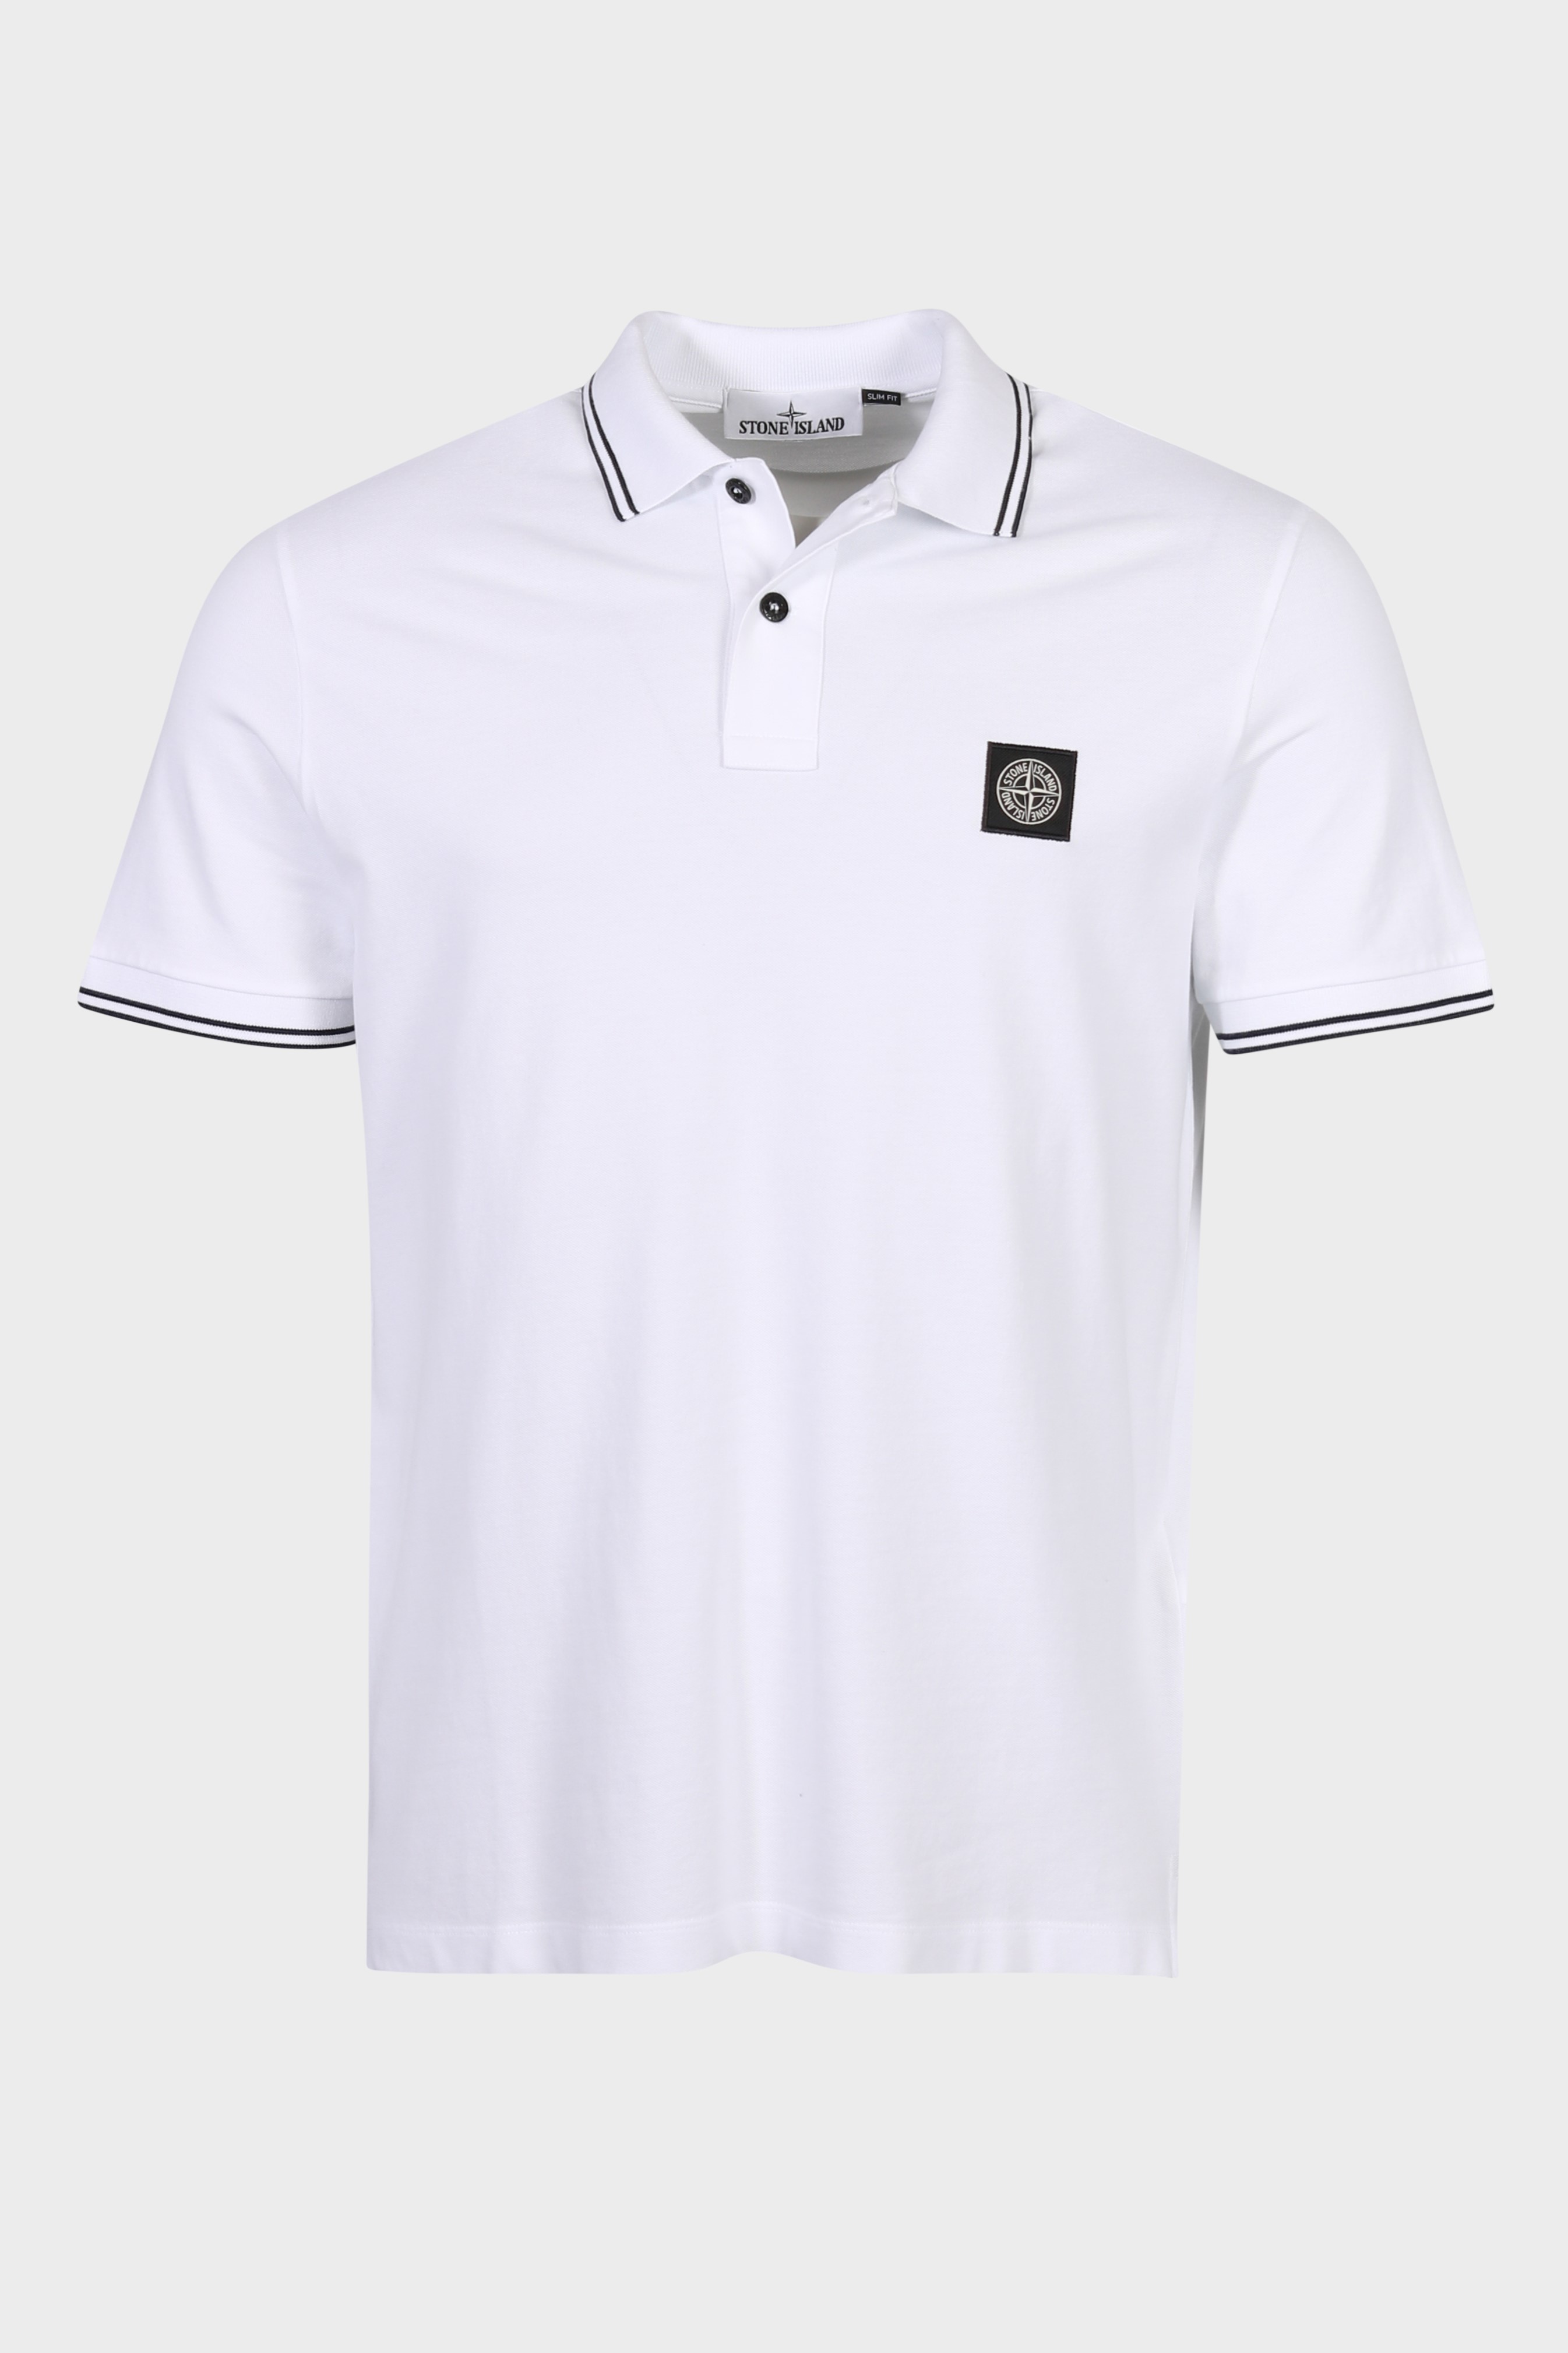 STONE ISLAND Slim Fit Polo Shirt in White XL